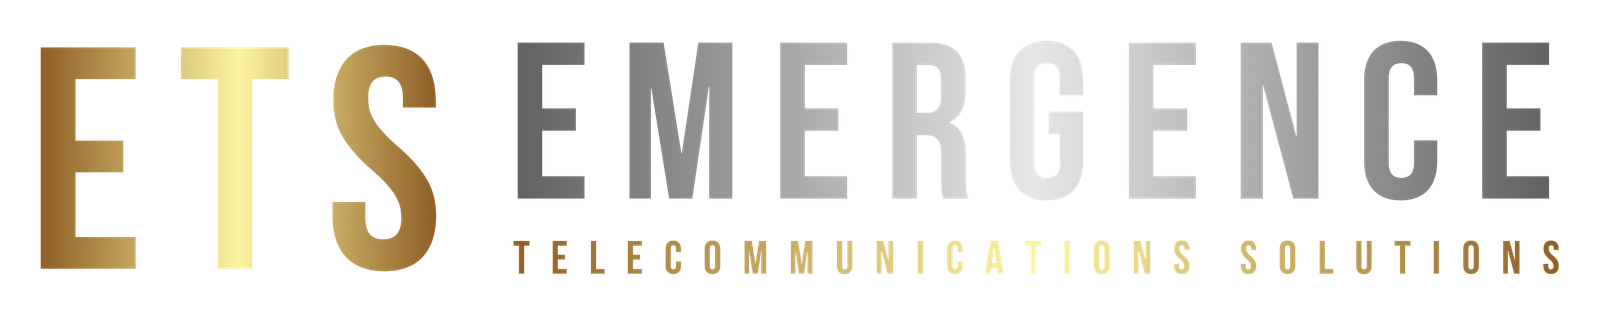 Emergencet Telecommunications Solutions Logo